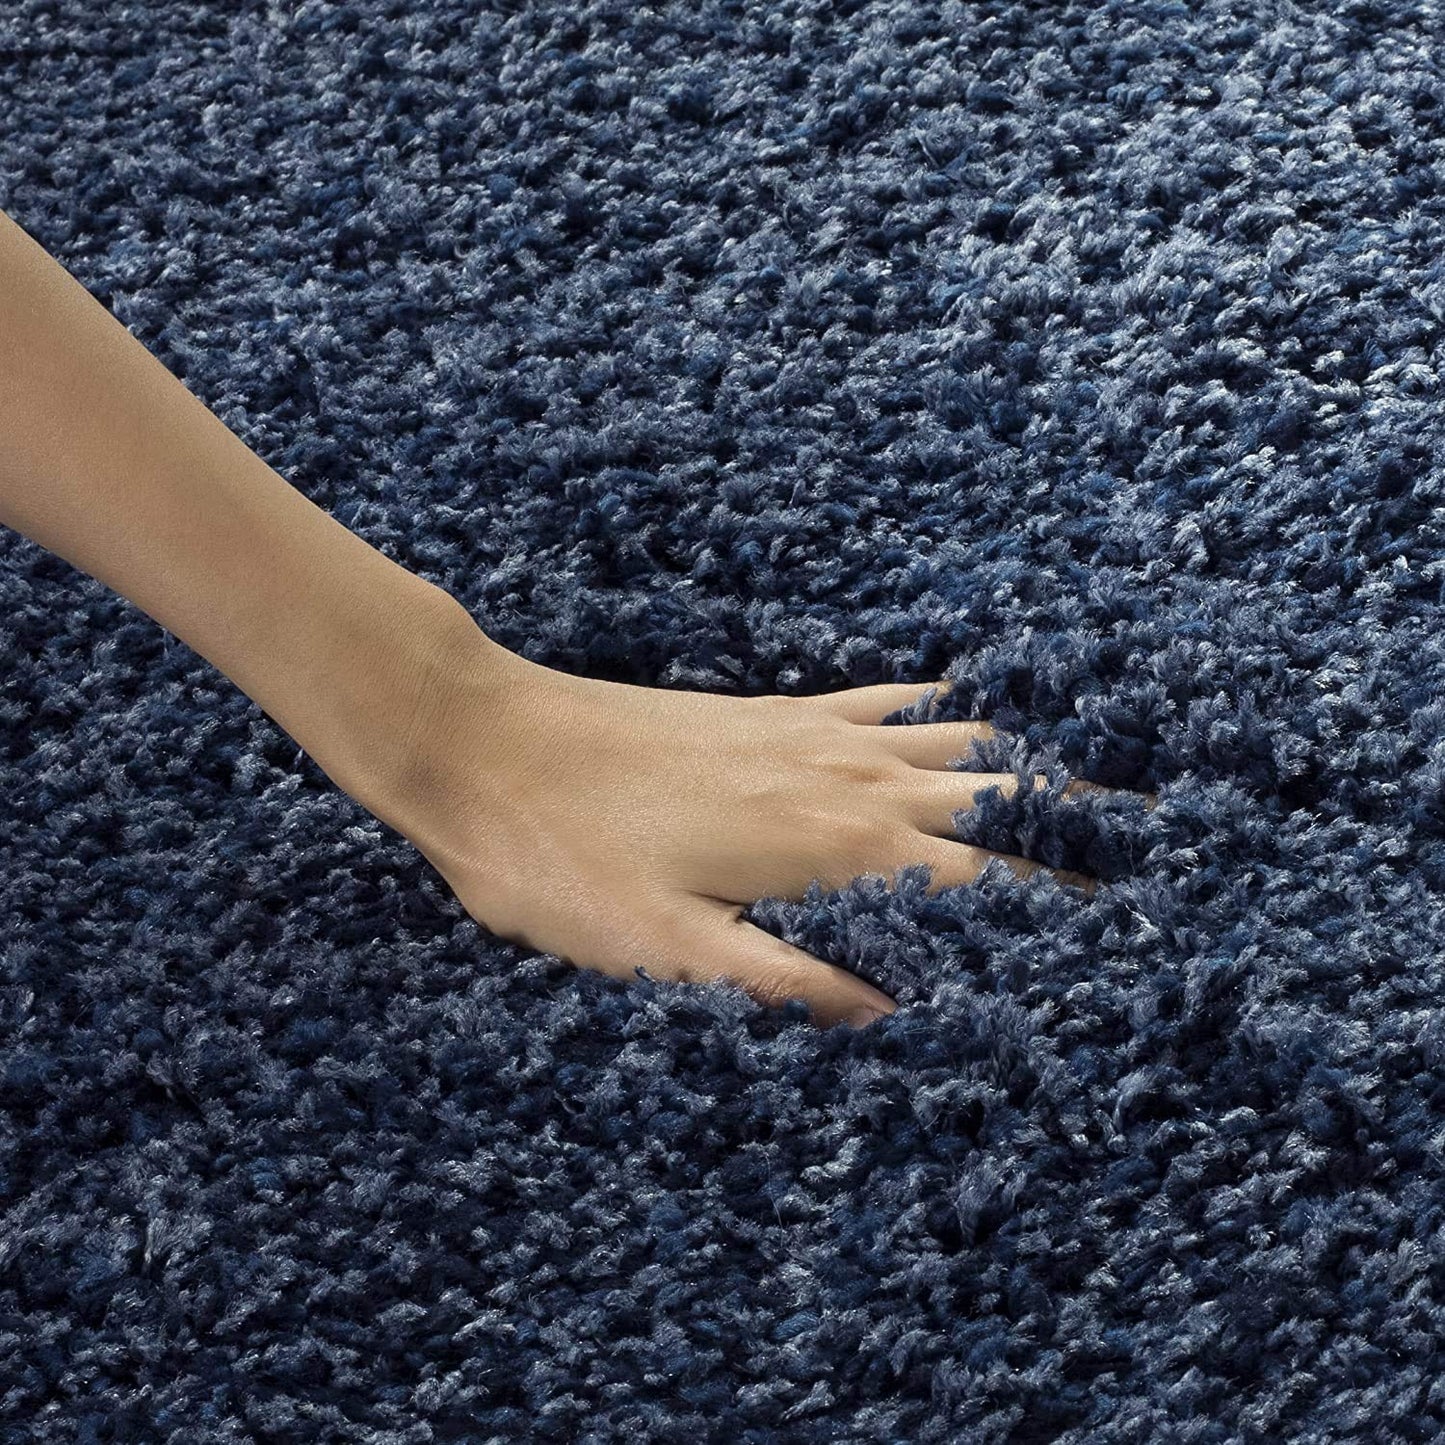 Kashyapa Rugs Collection - Navy Blue Plain - Premium Fluffy Shaggy Hand tufted Super soft Microfiber Carpet